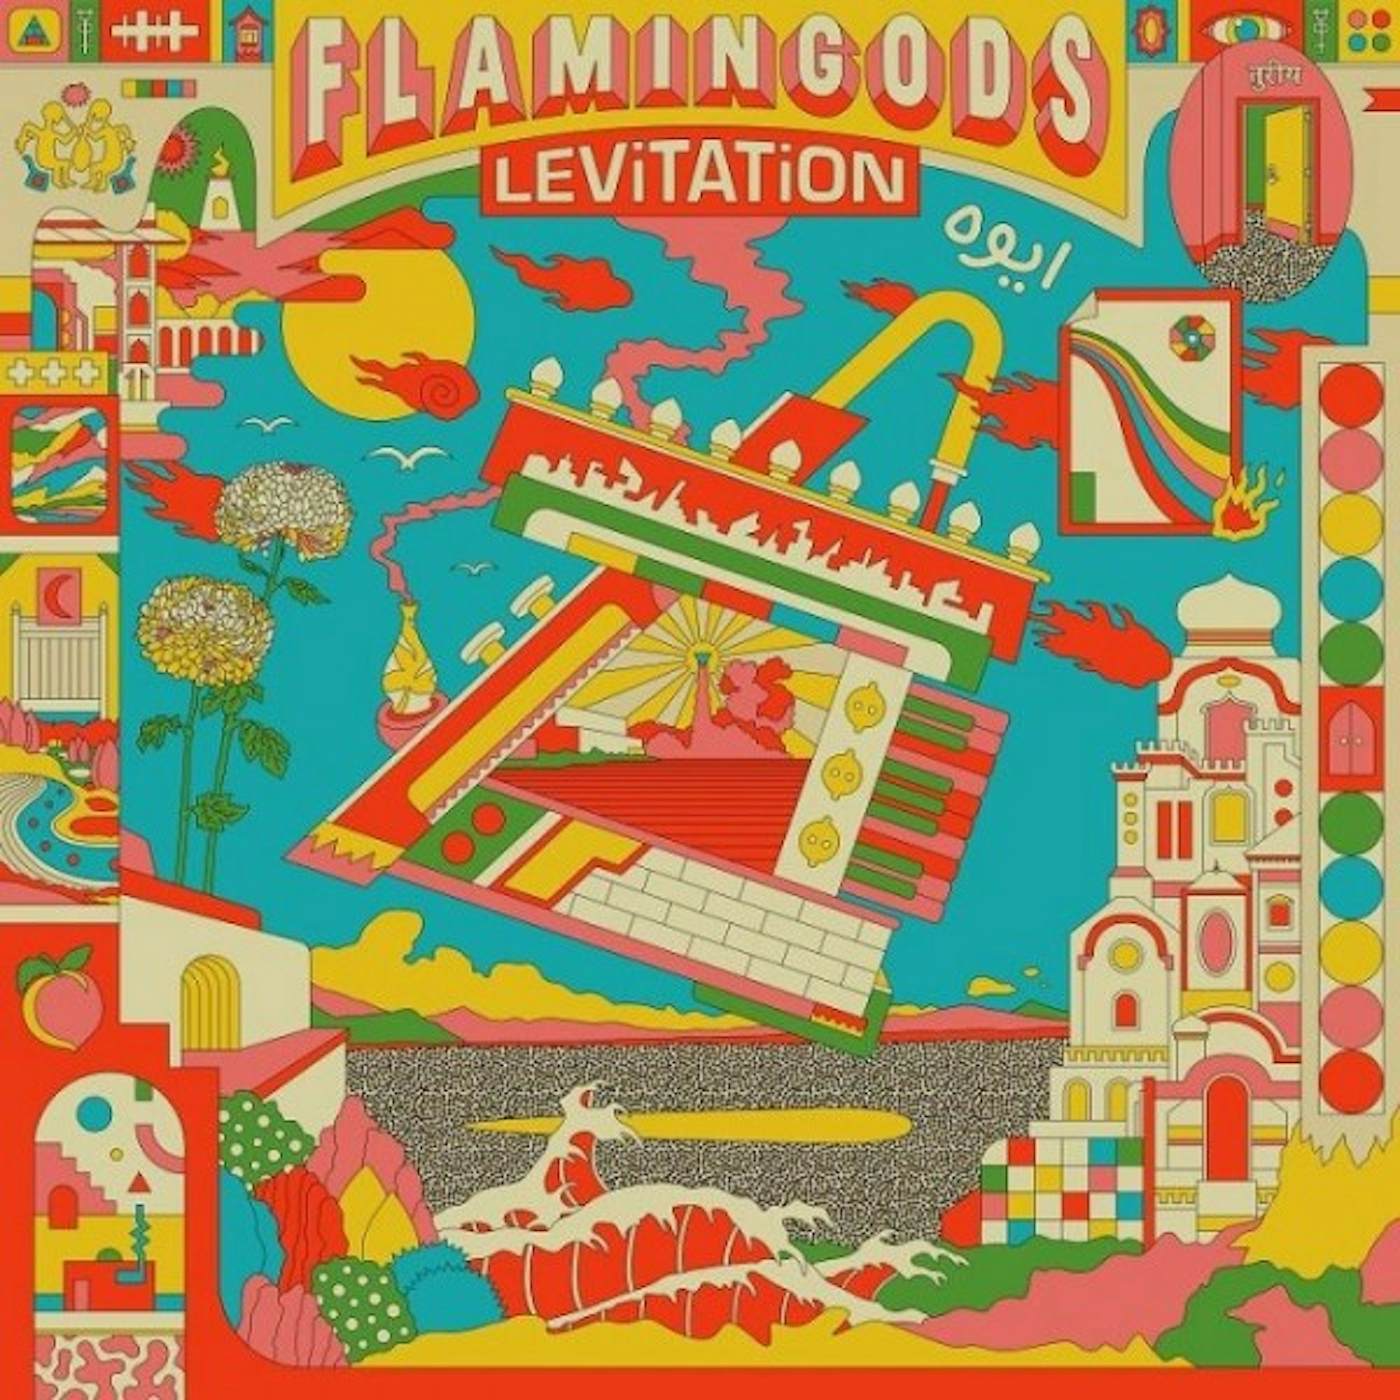 Flamingods Levitation Vinyl Record